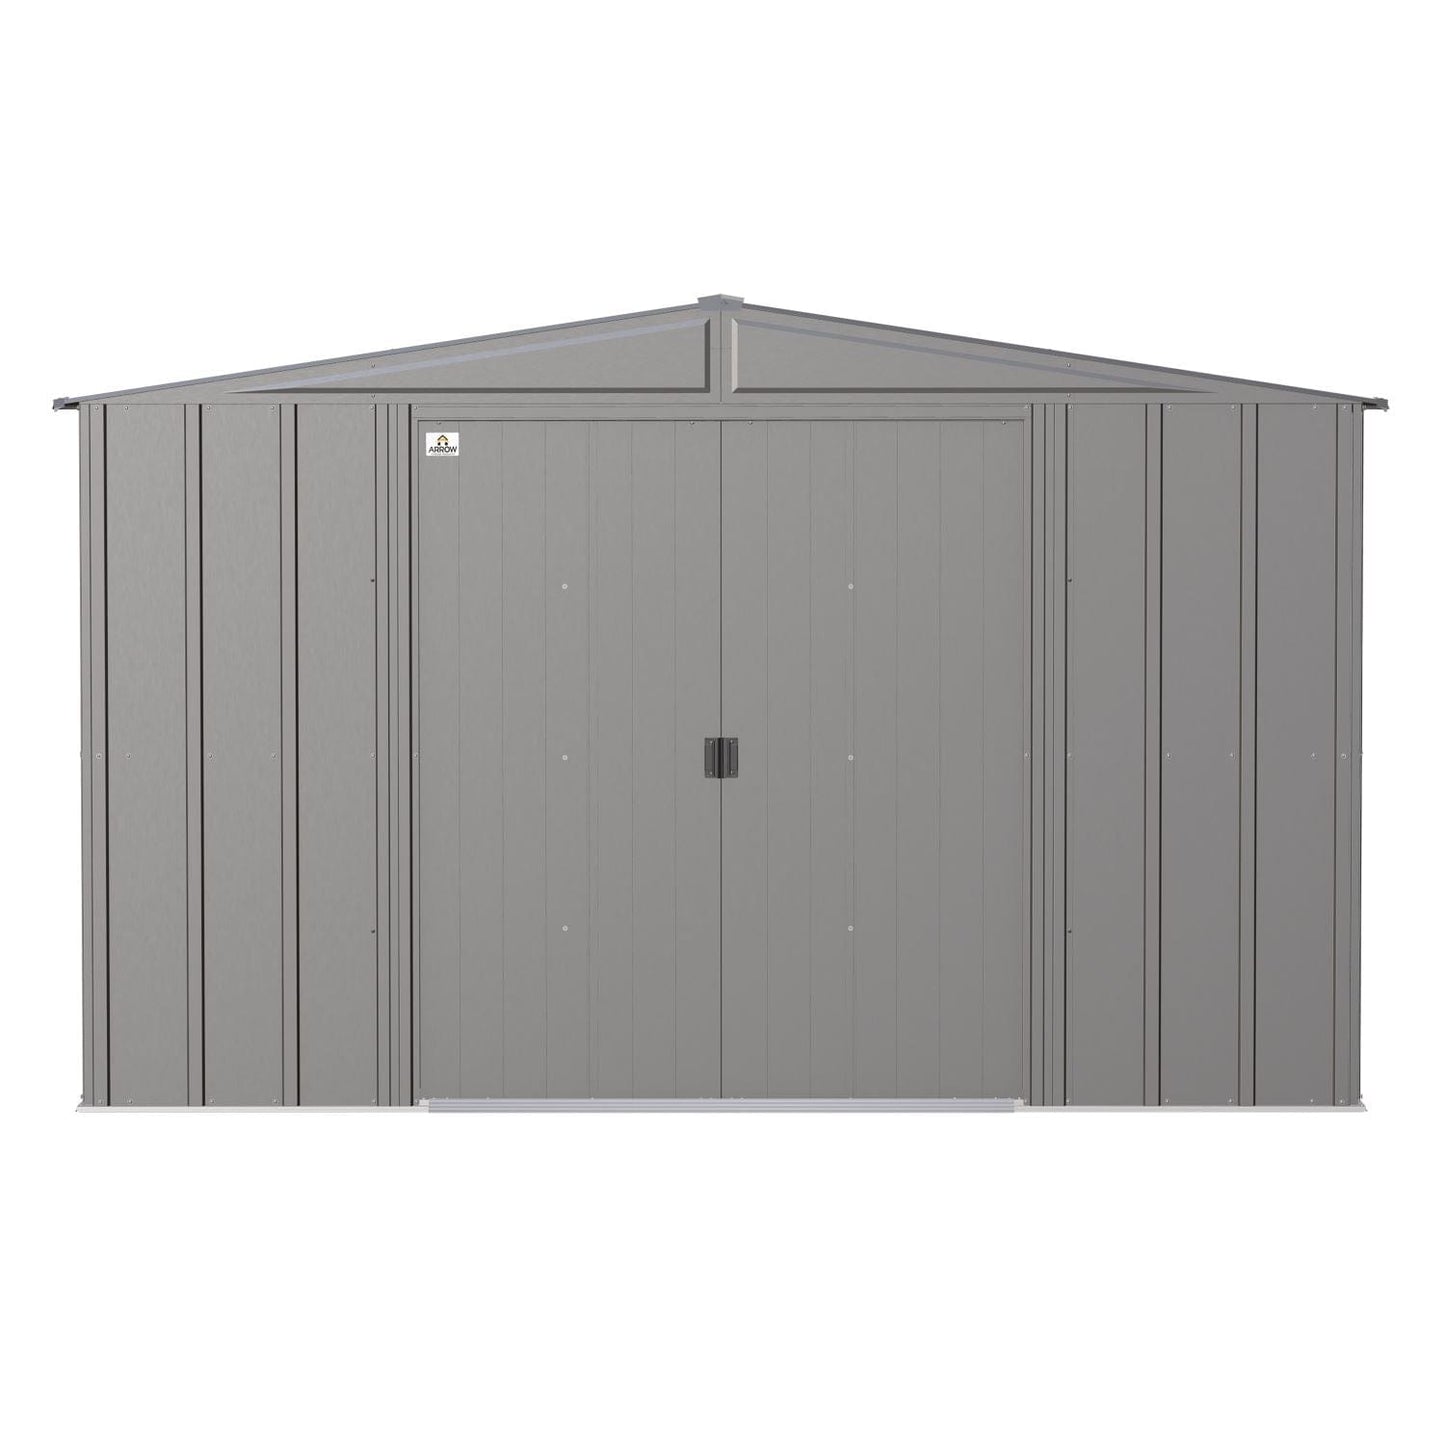 Arrow Metal Storage Shed Kit Arrow | Classic Steel Storage Shed, 10x8 ft., Charcoal CLG108CC